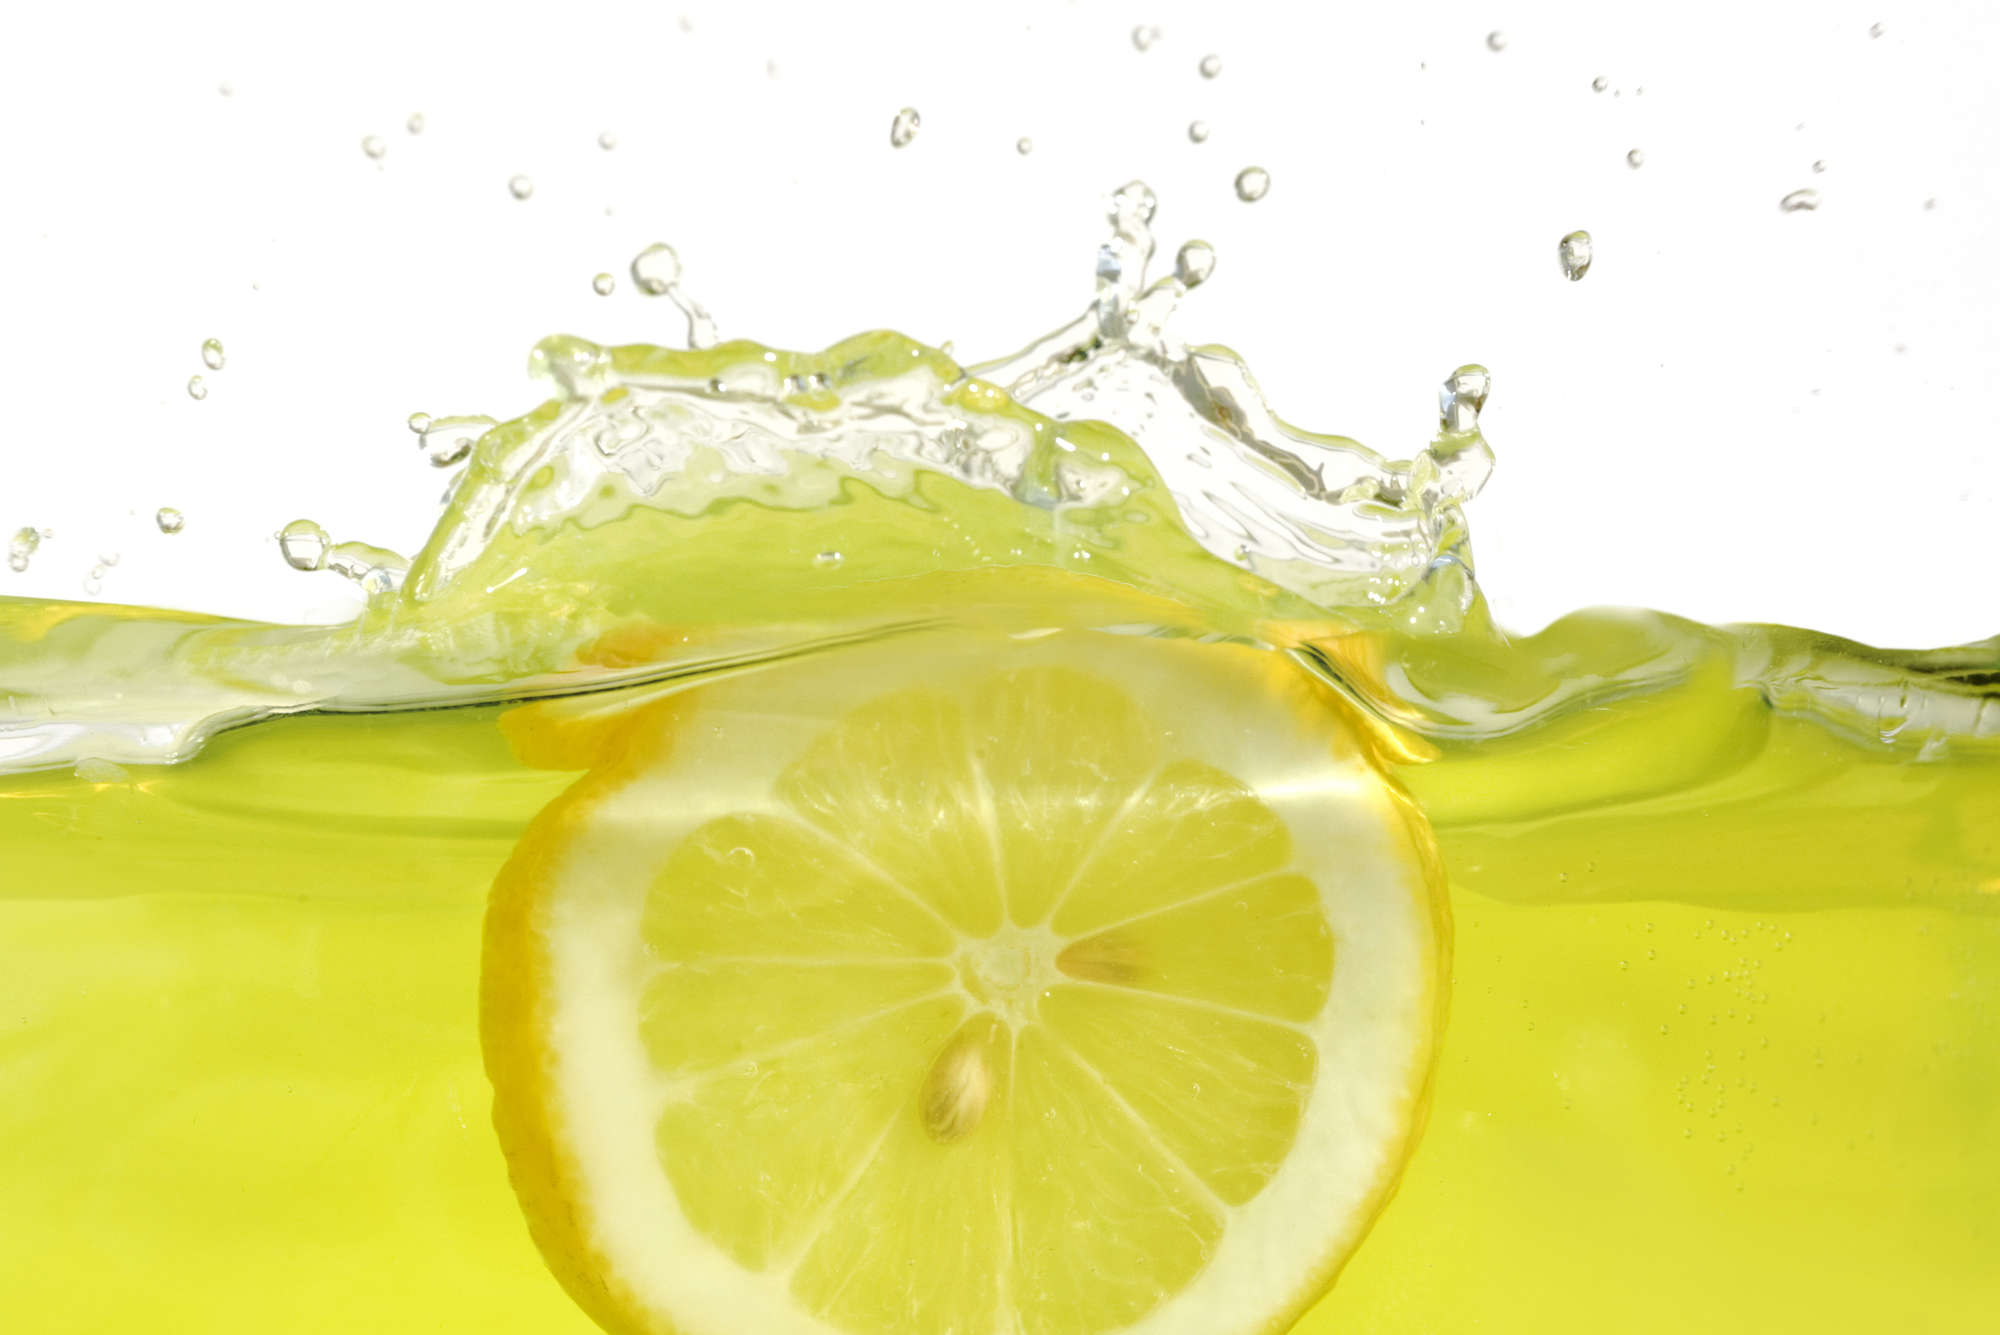             Lemon in the Water Onderlaag behang - structuurvlies
        